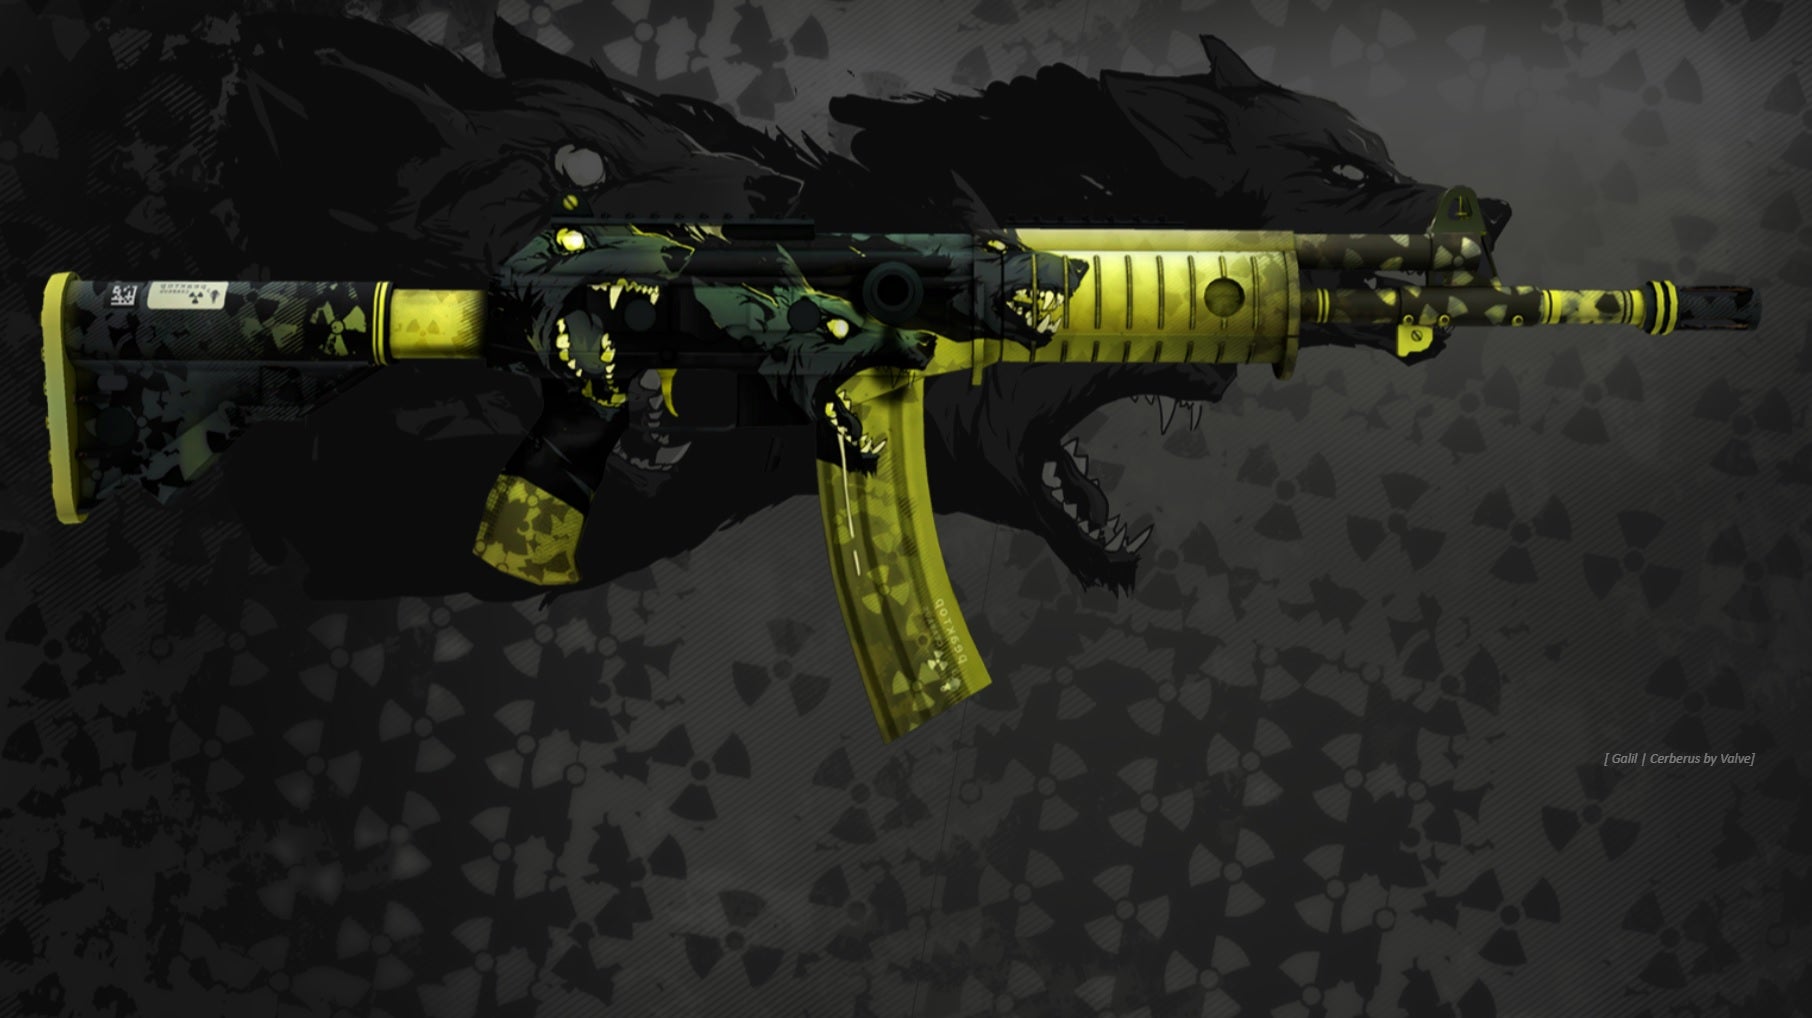 CS:GO Galil AR skin Cerberus - the Galil AR gun with greenish Cerberus head artwork